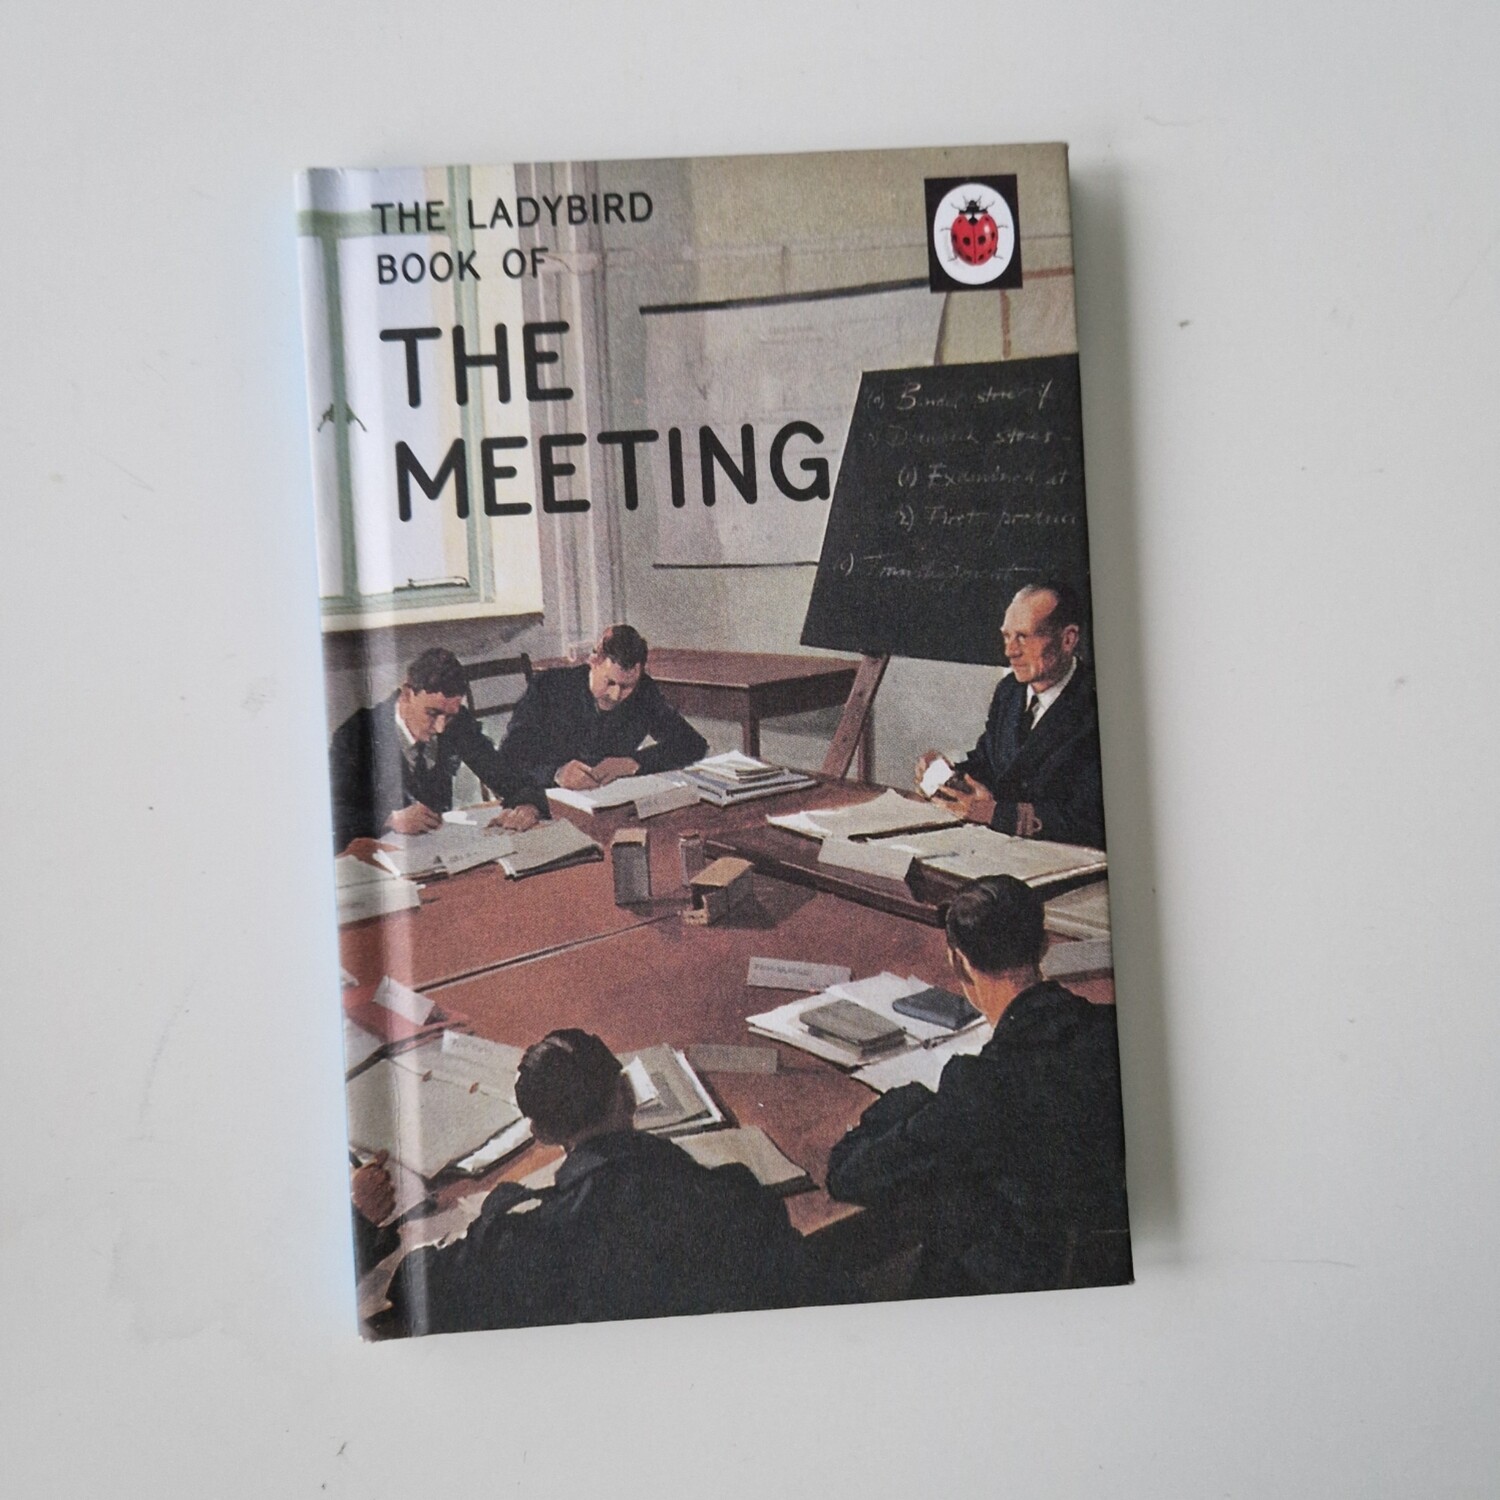 The Meeting - ladybird book